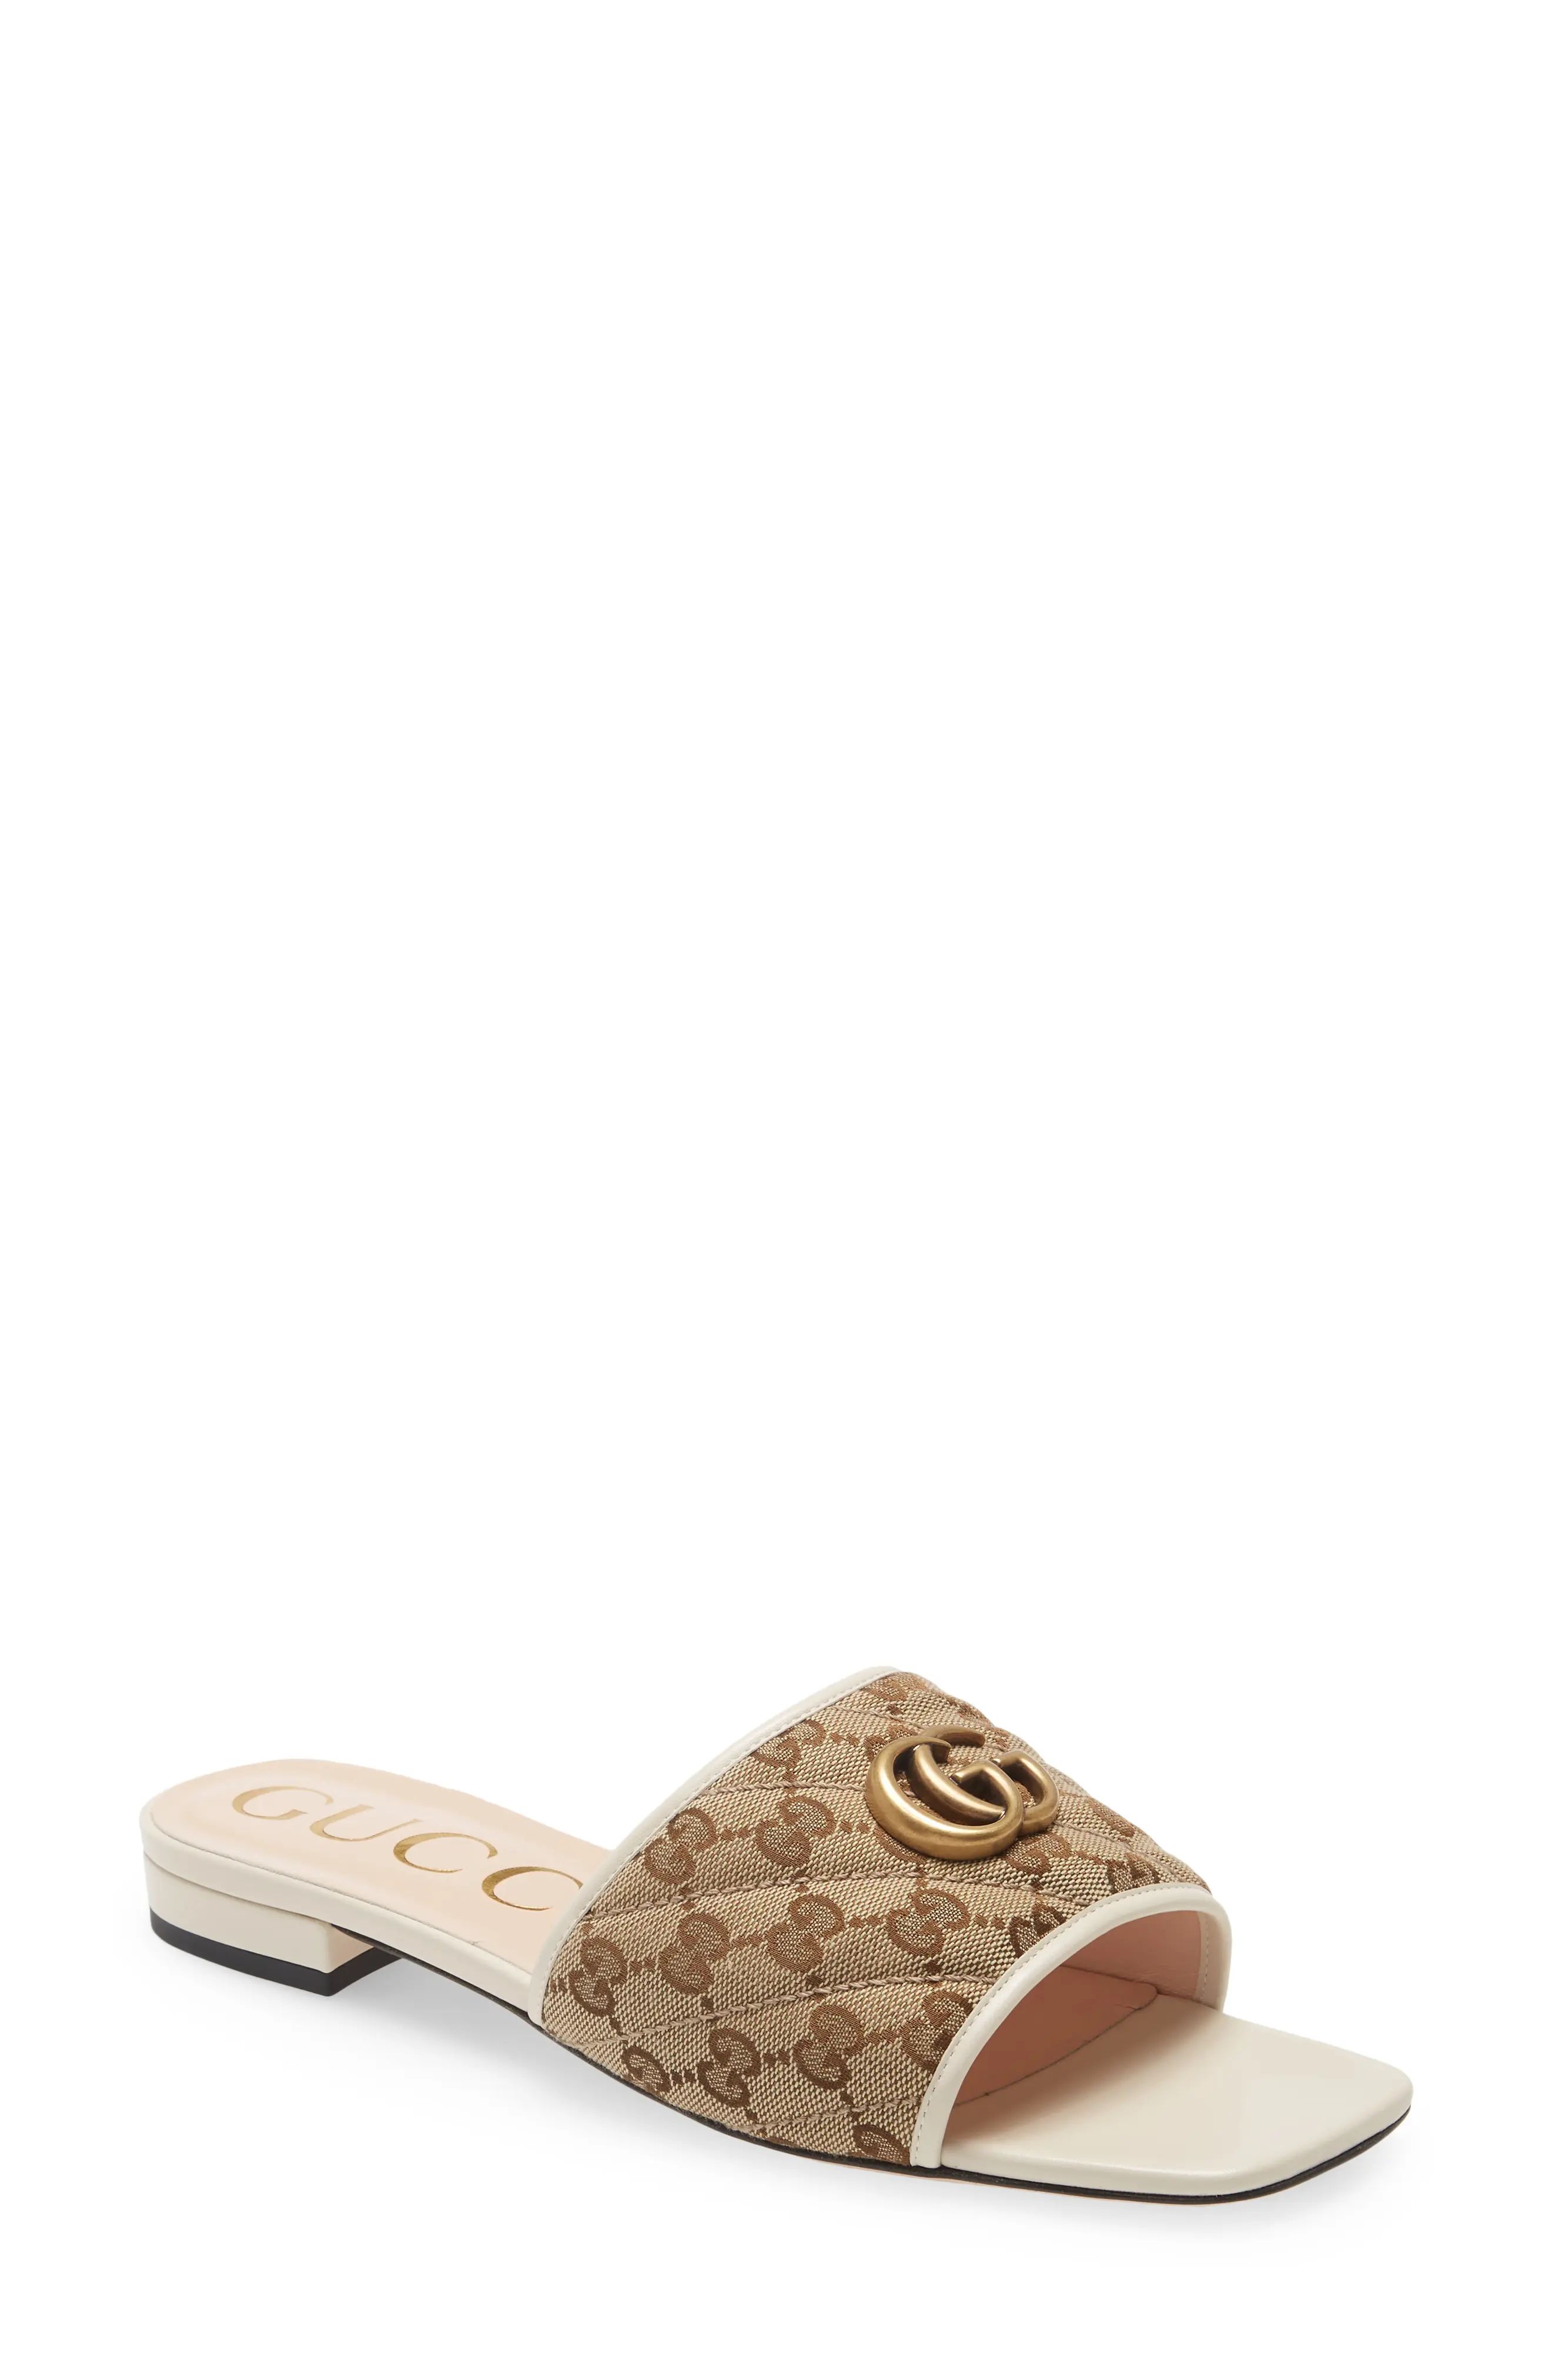 Gucci Jolie Slide Sandal in Beige-Ebony/My White at Nordstrom, Size 6Us | Nordstrom